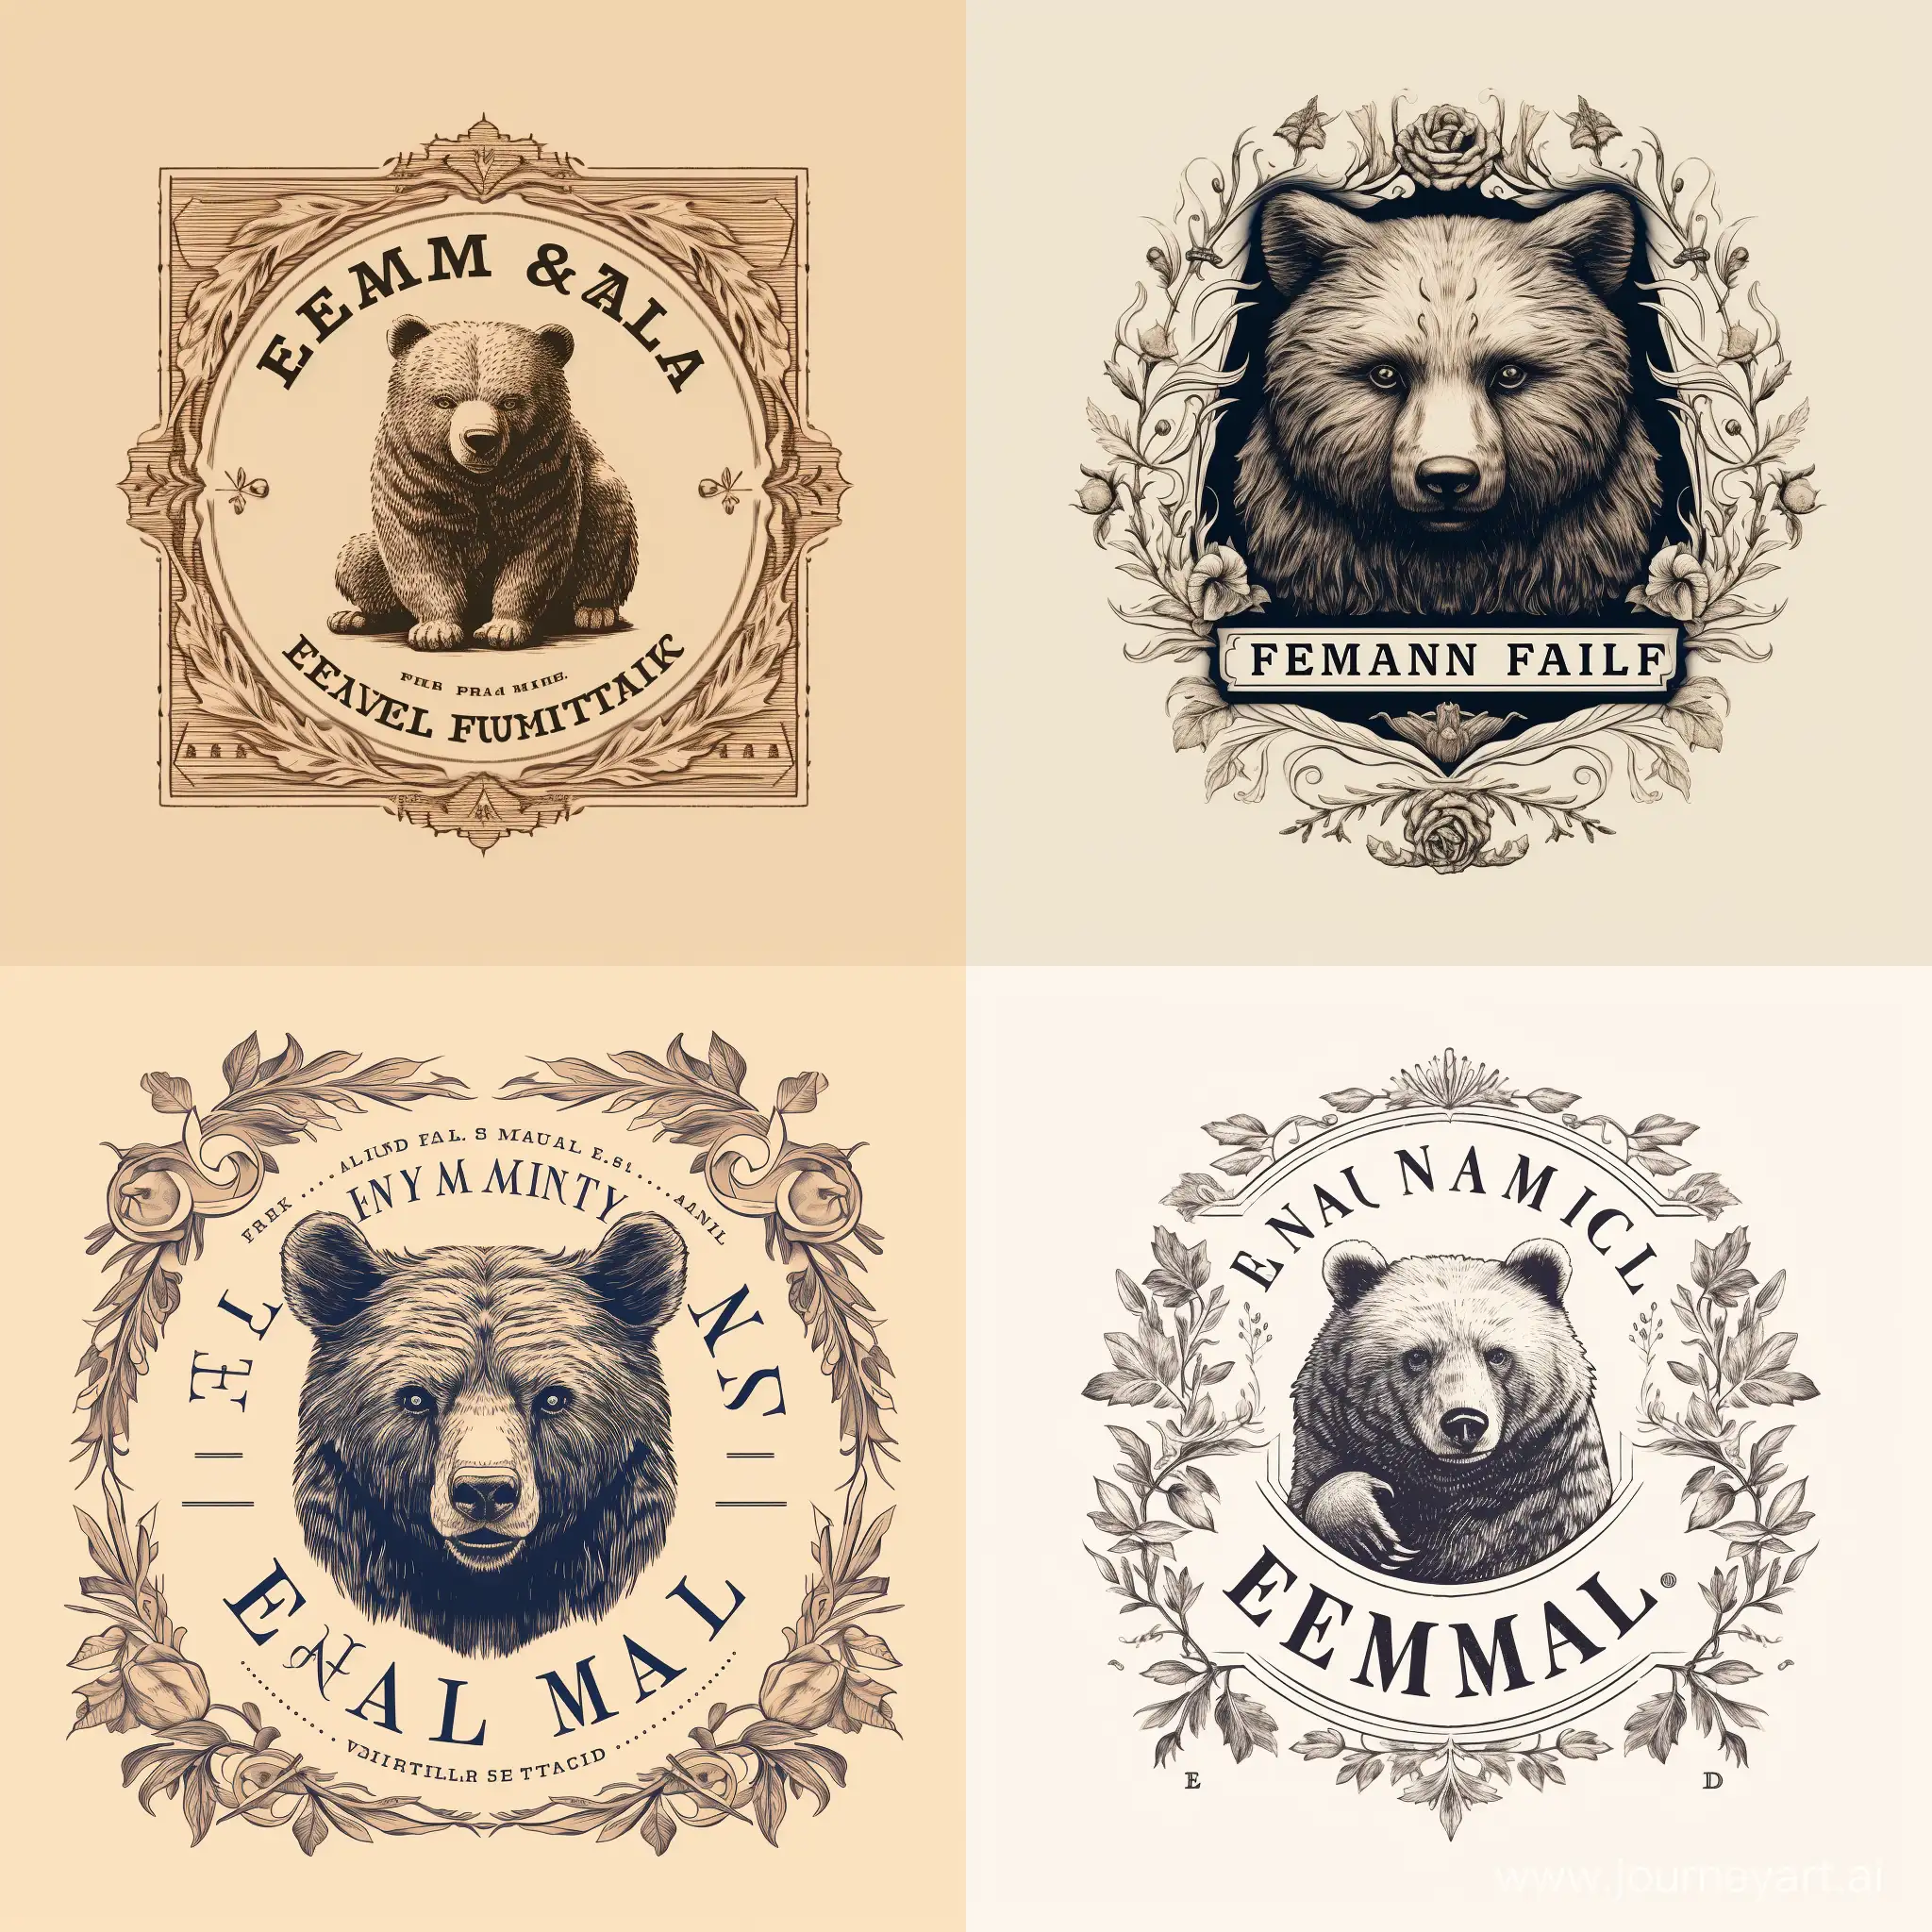 logo, stamp with the words, unframed, few details , elm bear in center